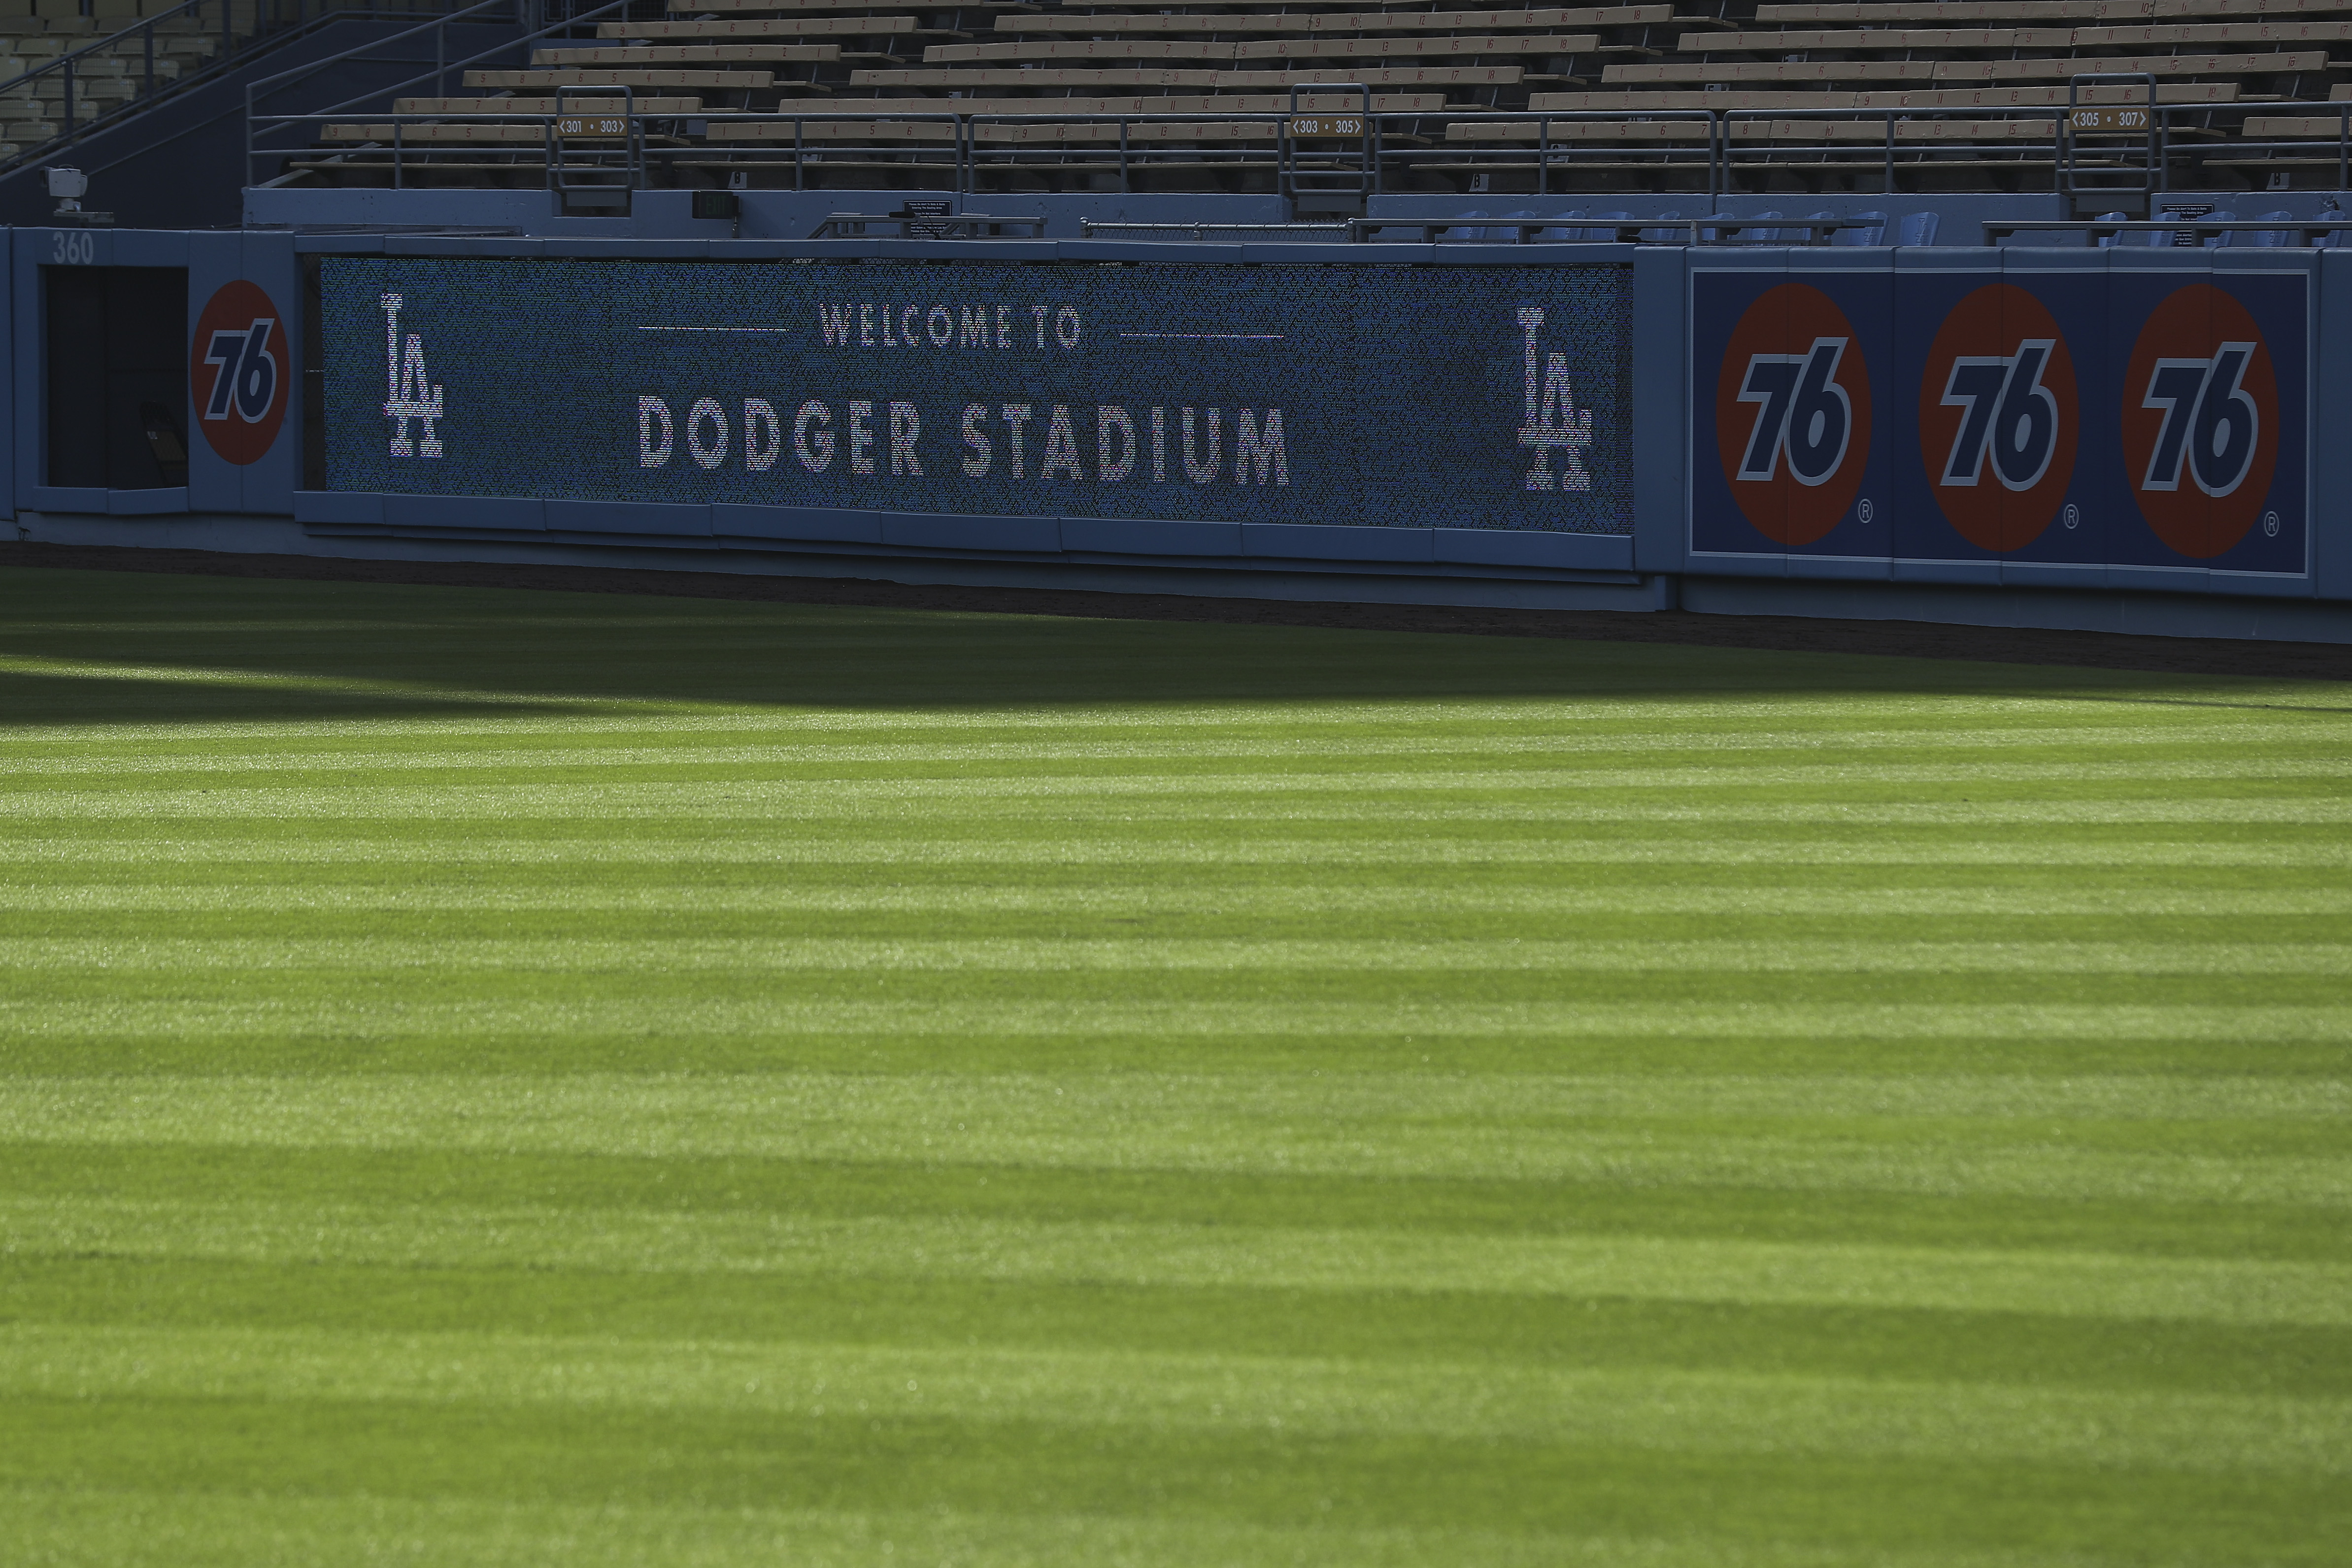 Dodgers 2020 World Series Rings – NBC Los Angeles